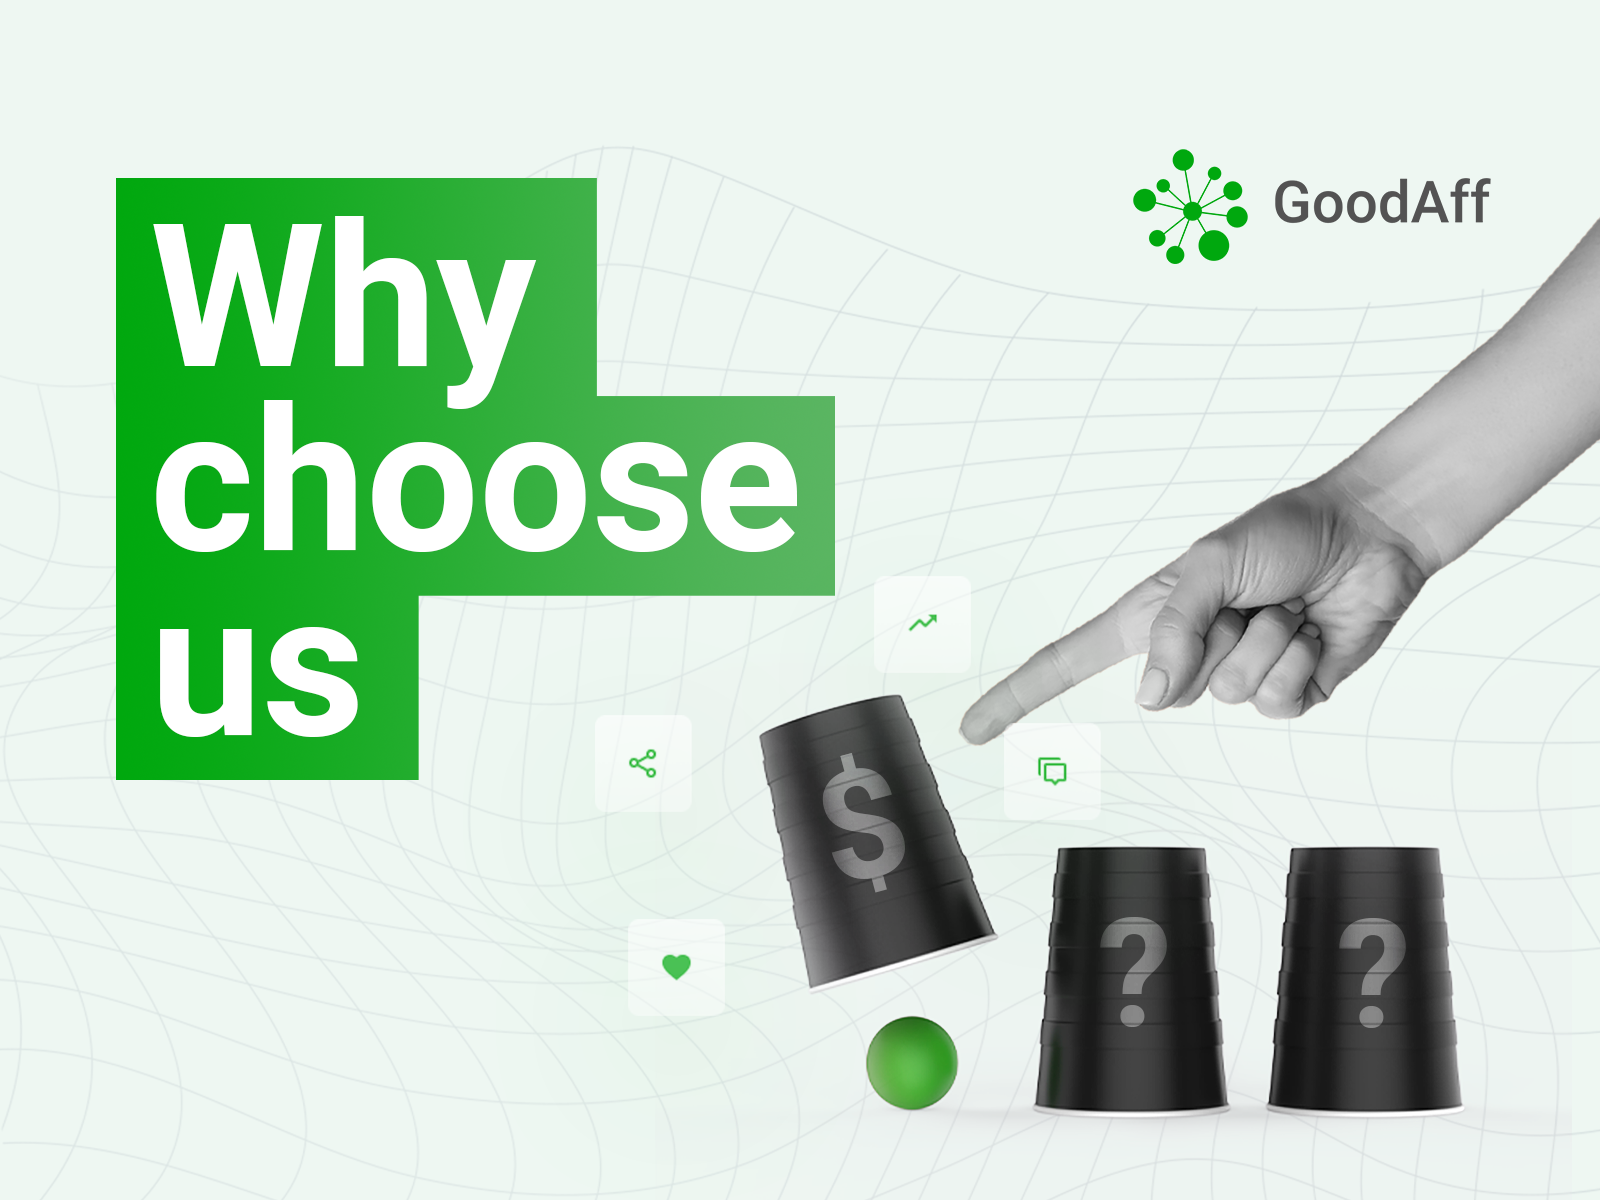 Why choose GoodAff